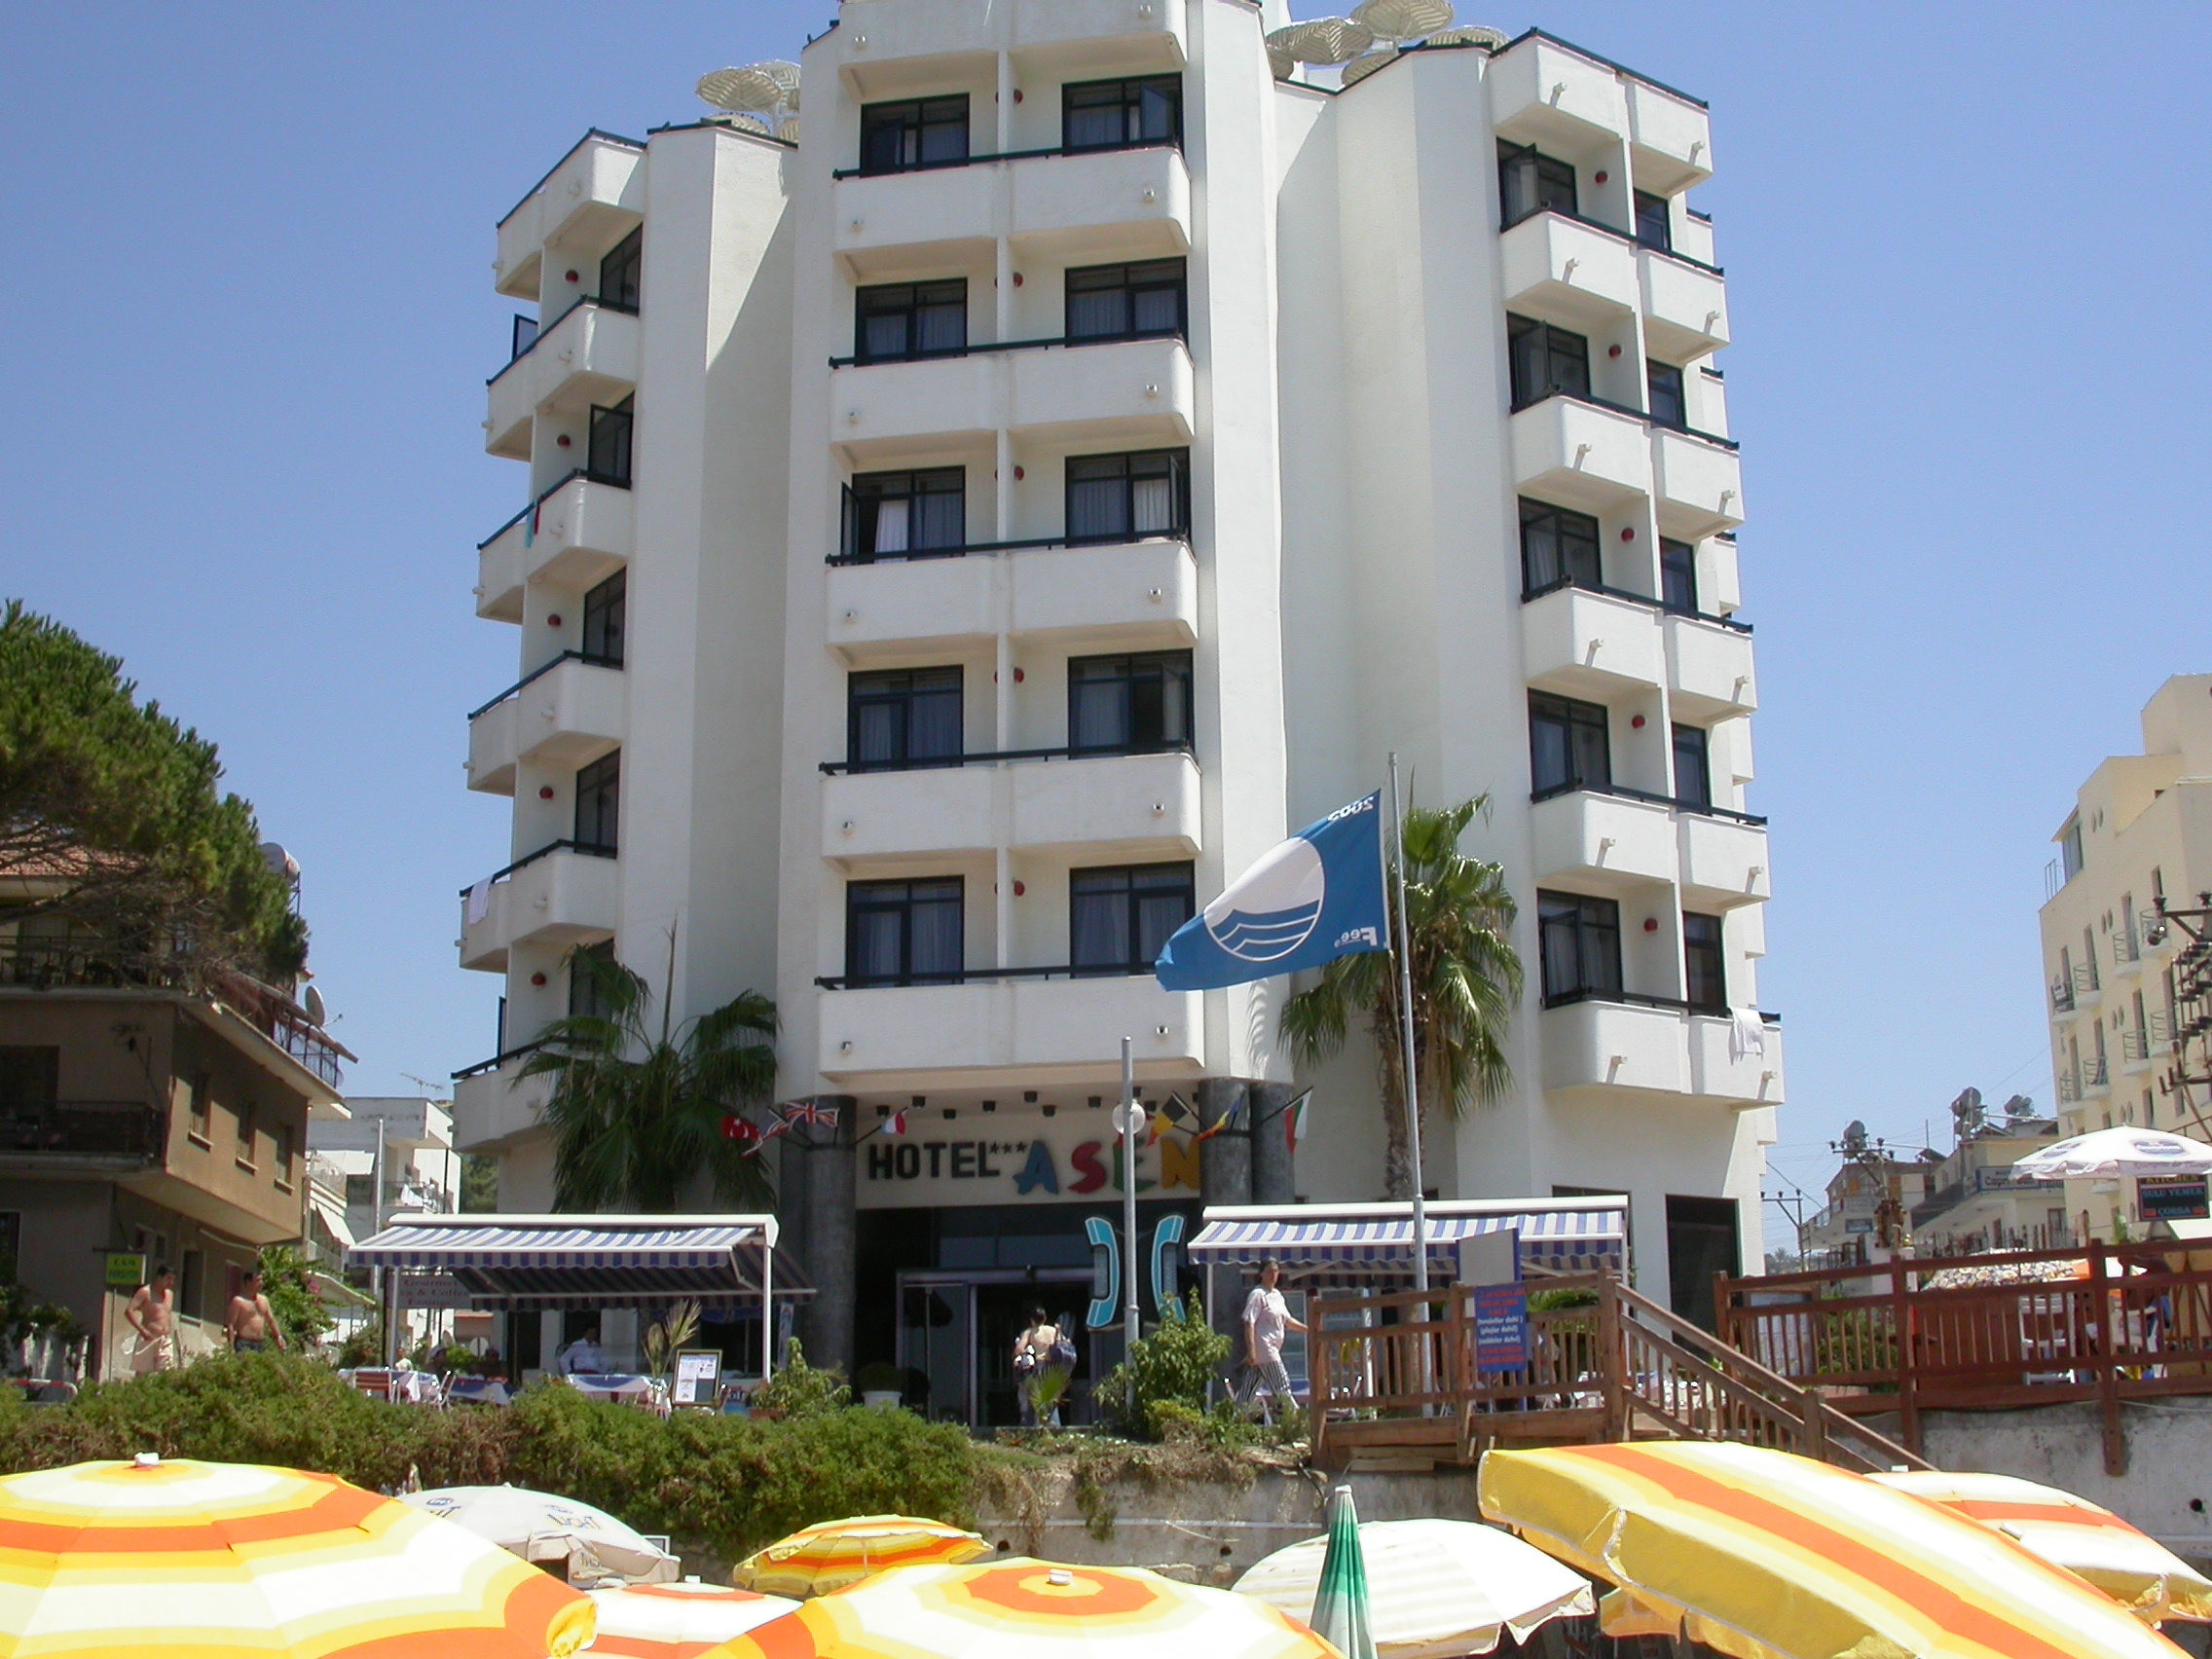 Hotel Asena, Turska - Kušadasi